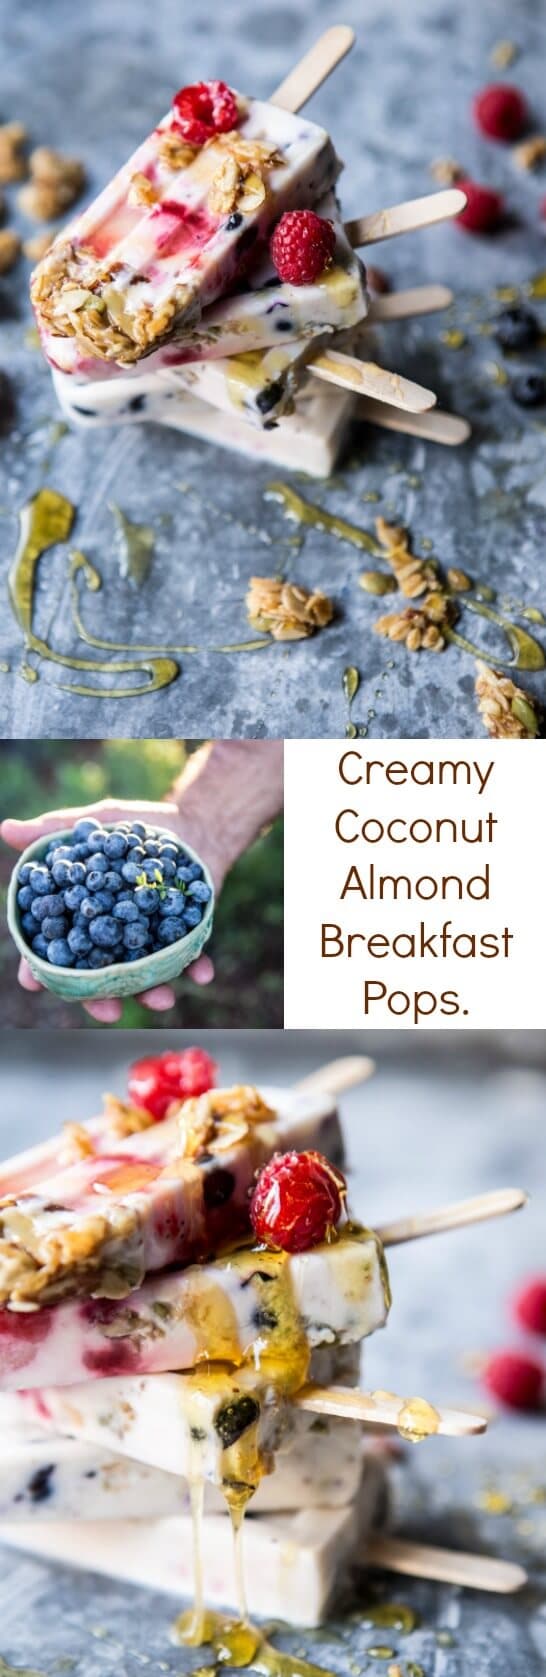 Creamy Coconut Almond Breakfast Pops | halfbakedharvest.com @hbharvest